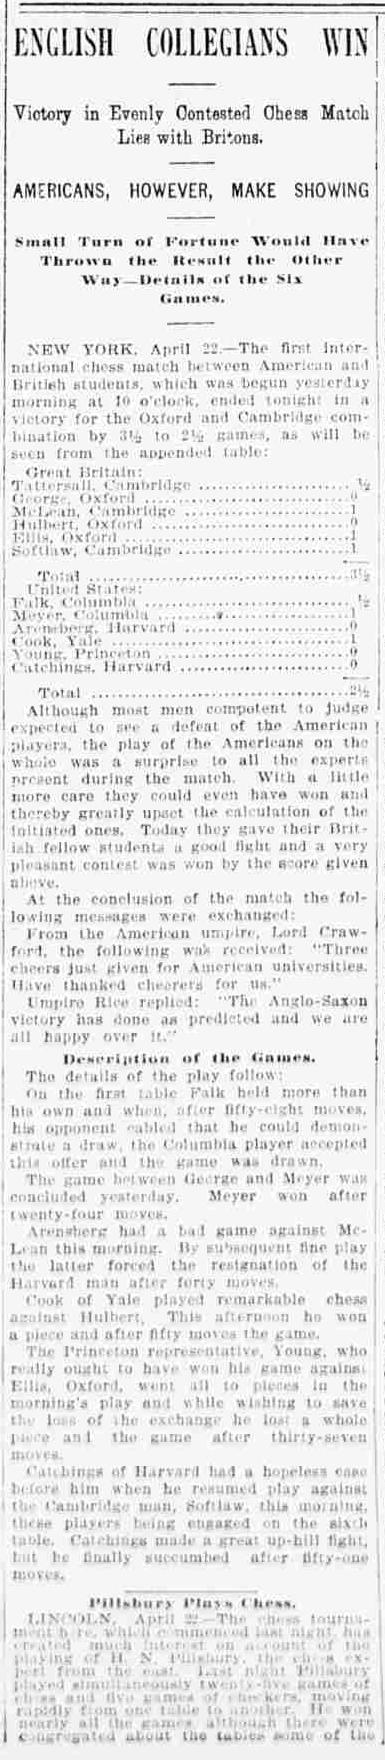 1899.04.23-03 Omaha Daily Bee.jpg